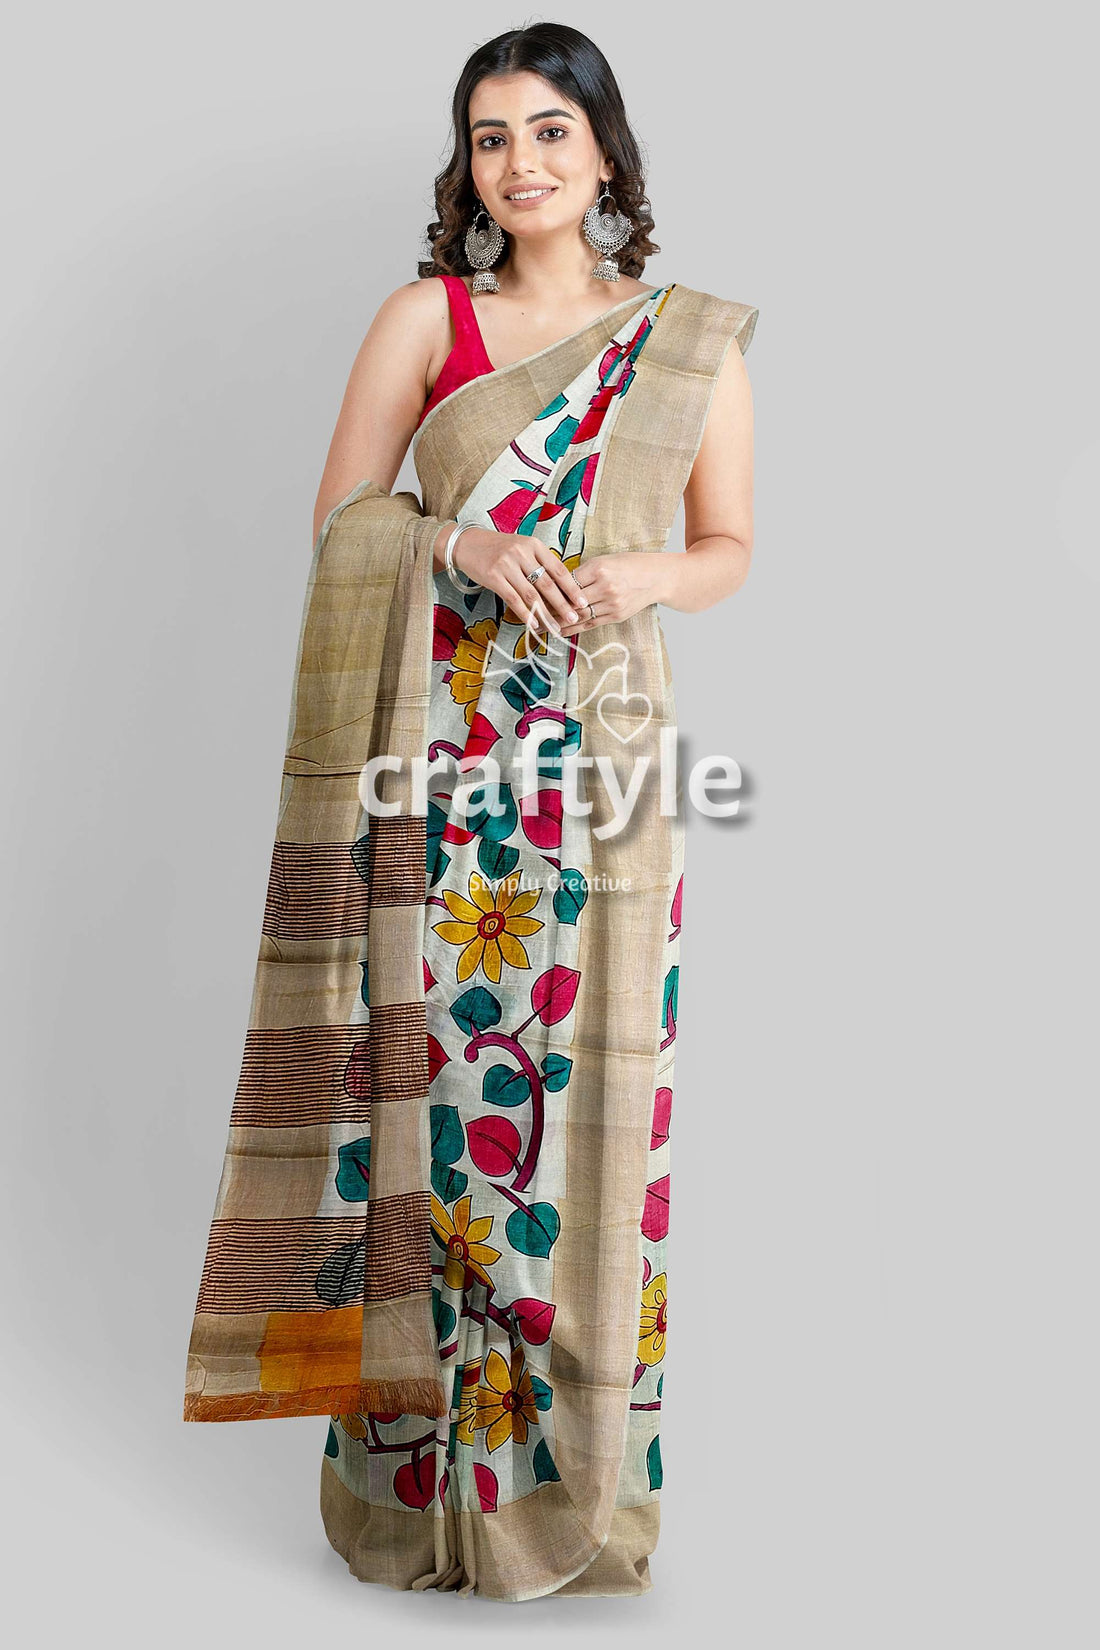 Handcrafted Zari Border Pure Tussar Kalamkari Sari with Radha Krishna Design - Craftyle